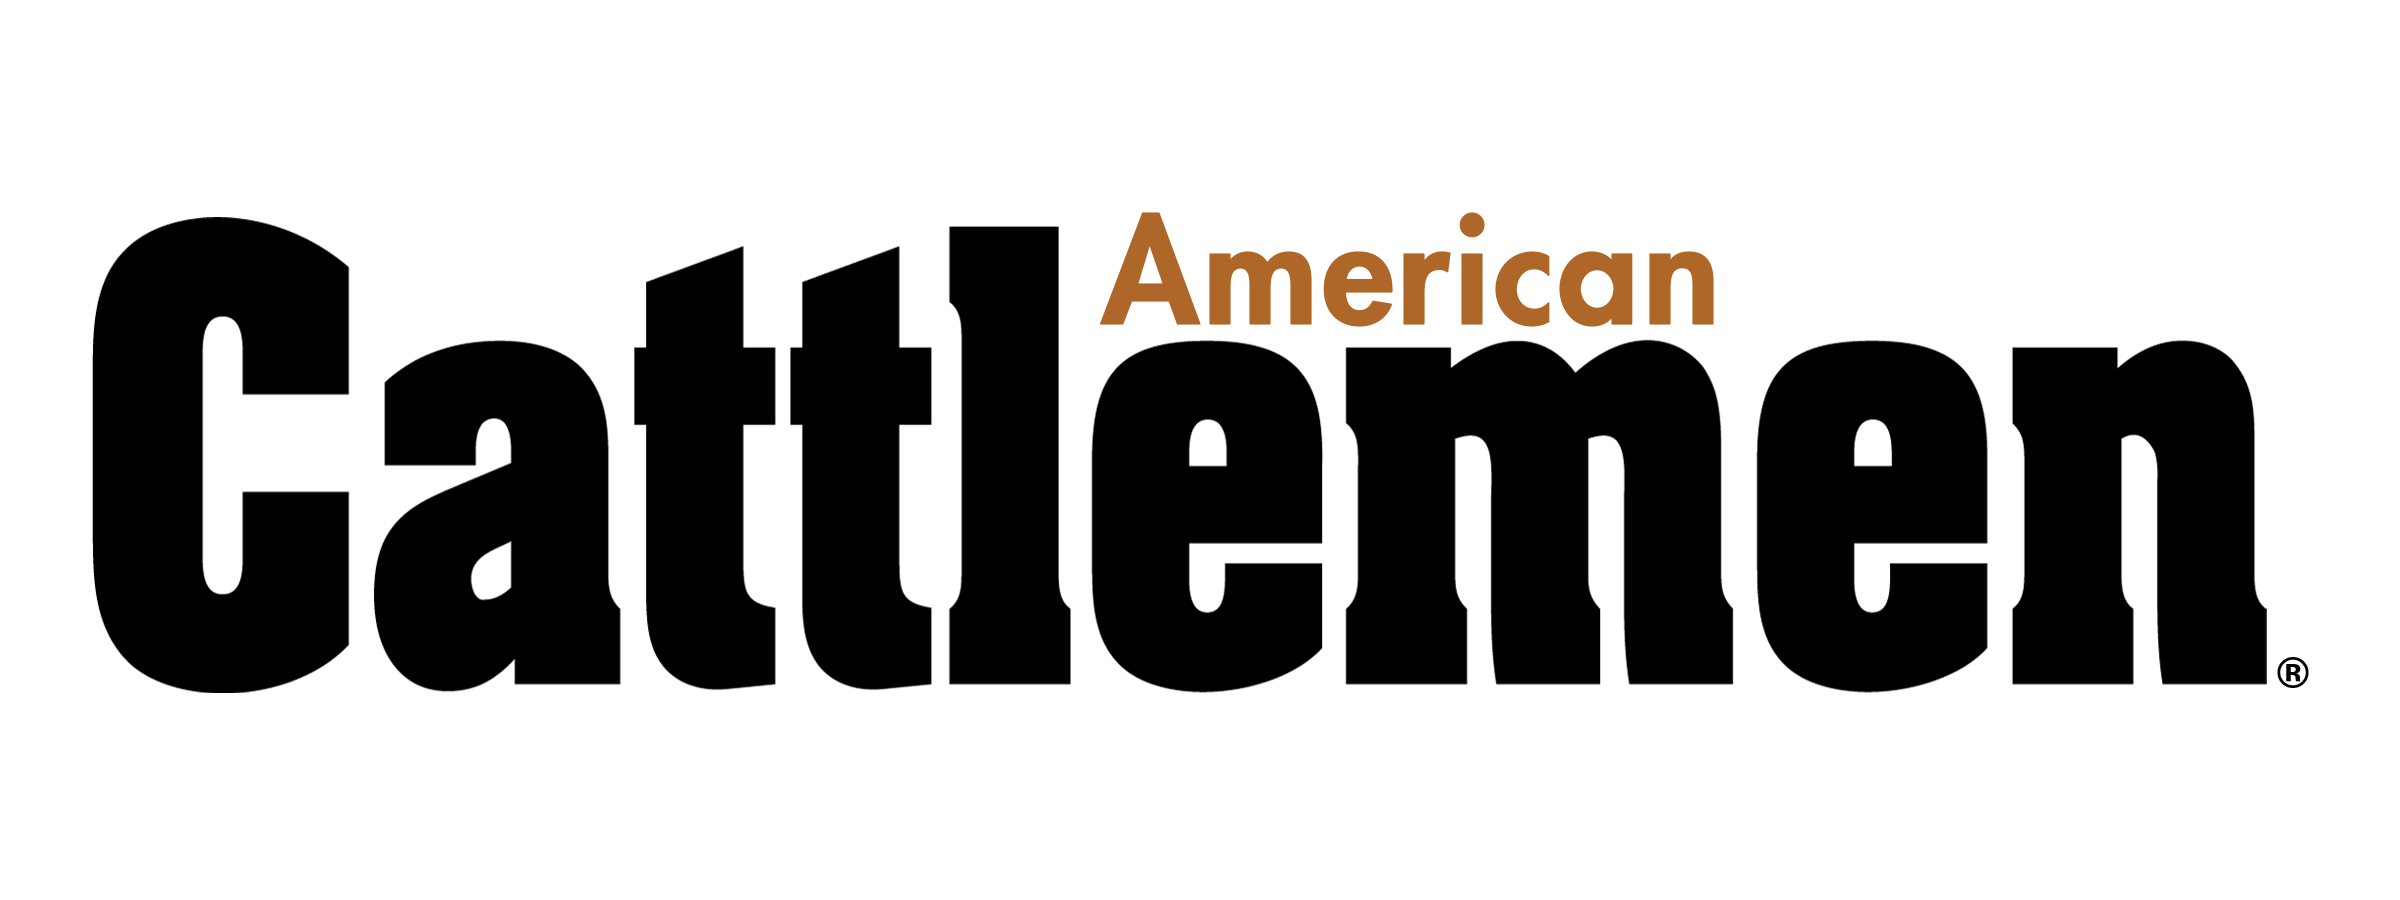 American Cattlemen logo